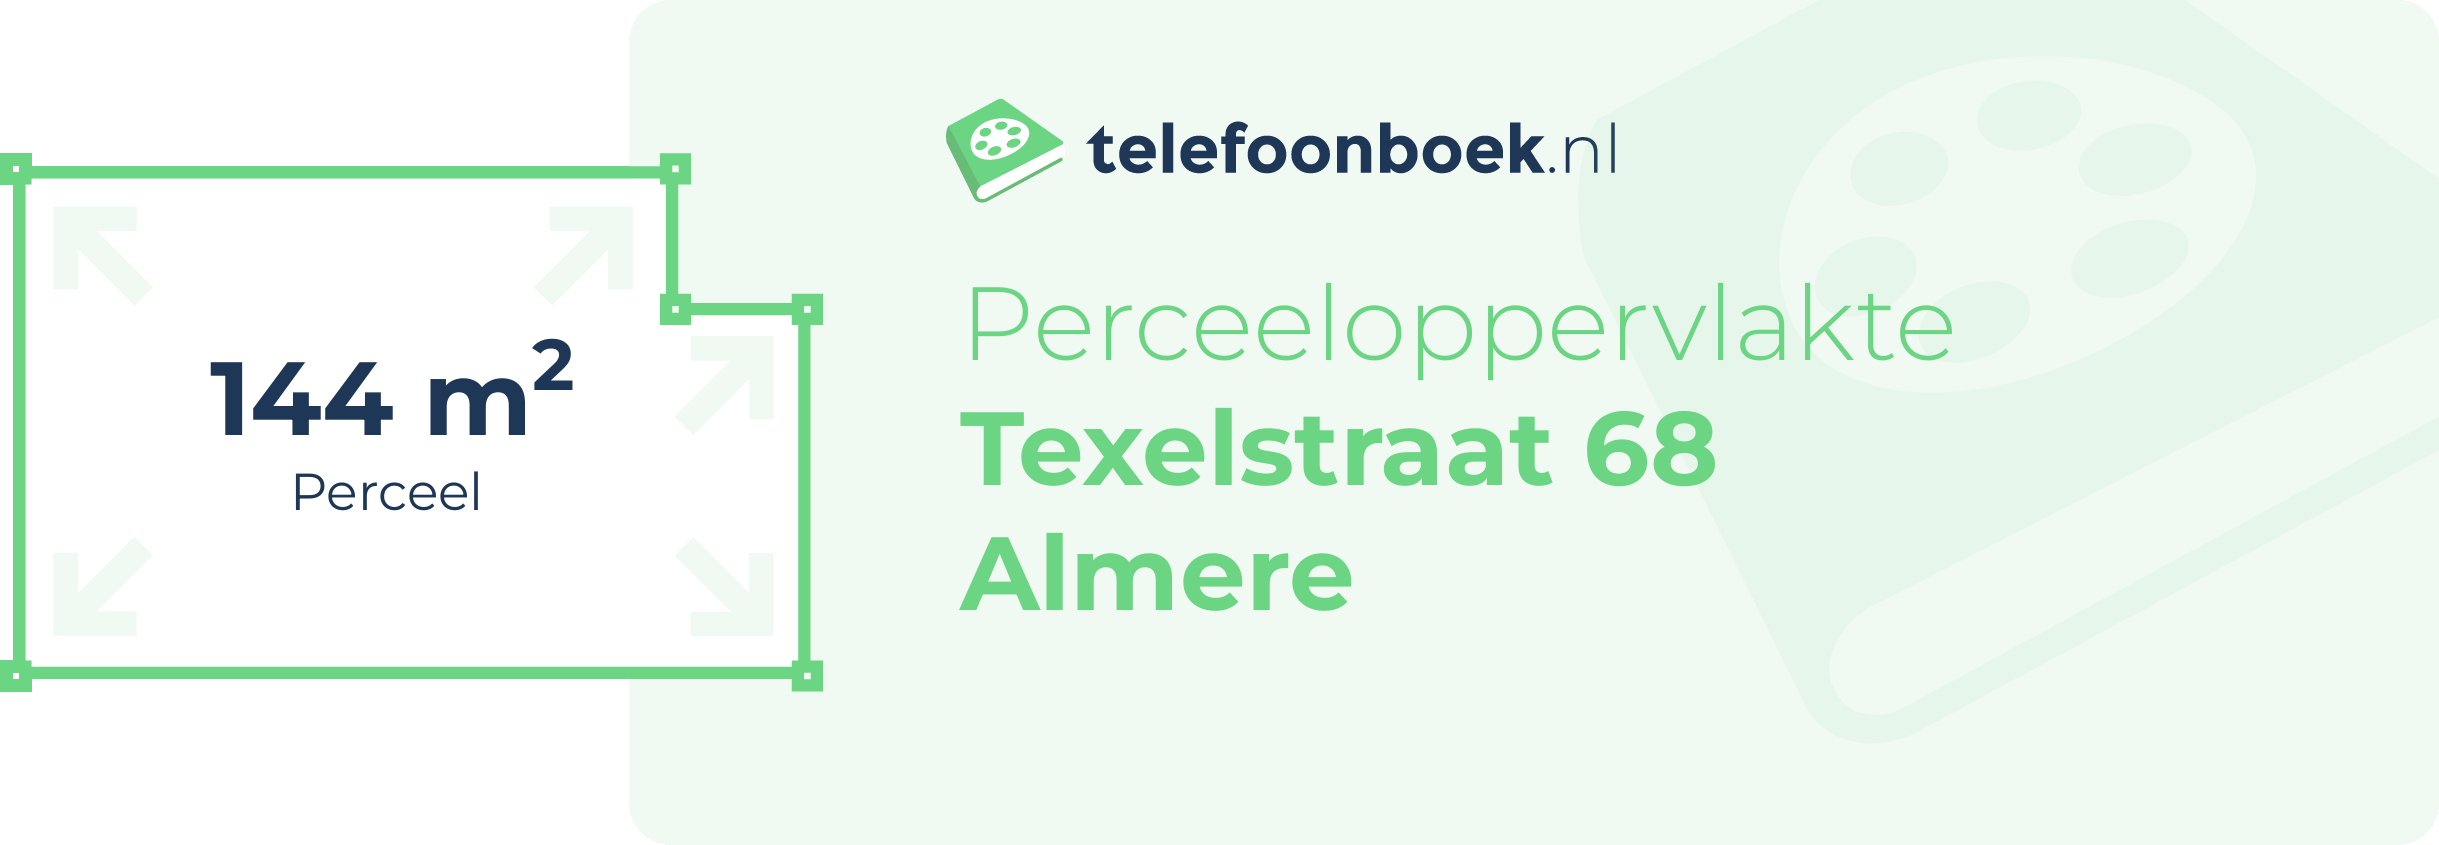 Perceeloppervlakte Texelstraat 68 Almere